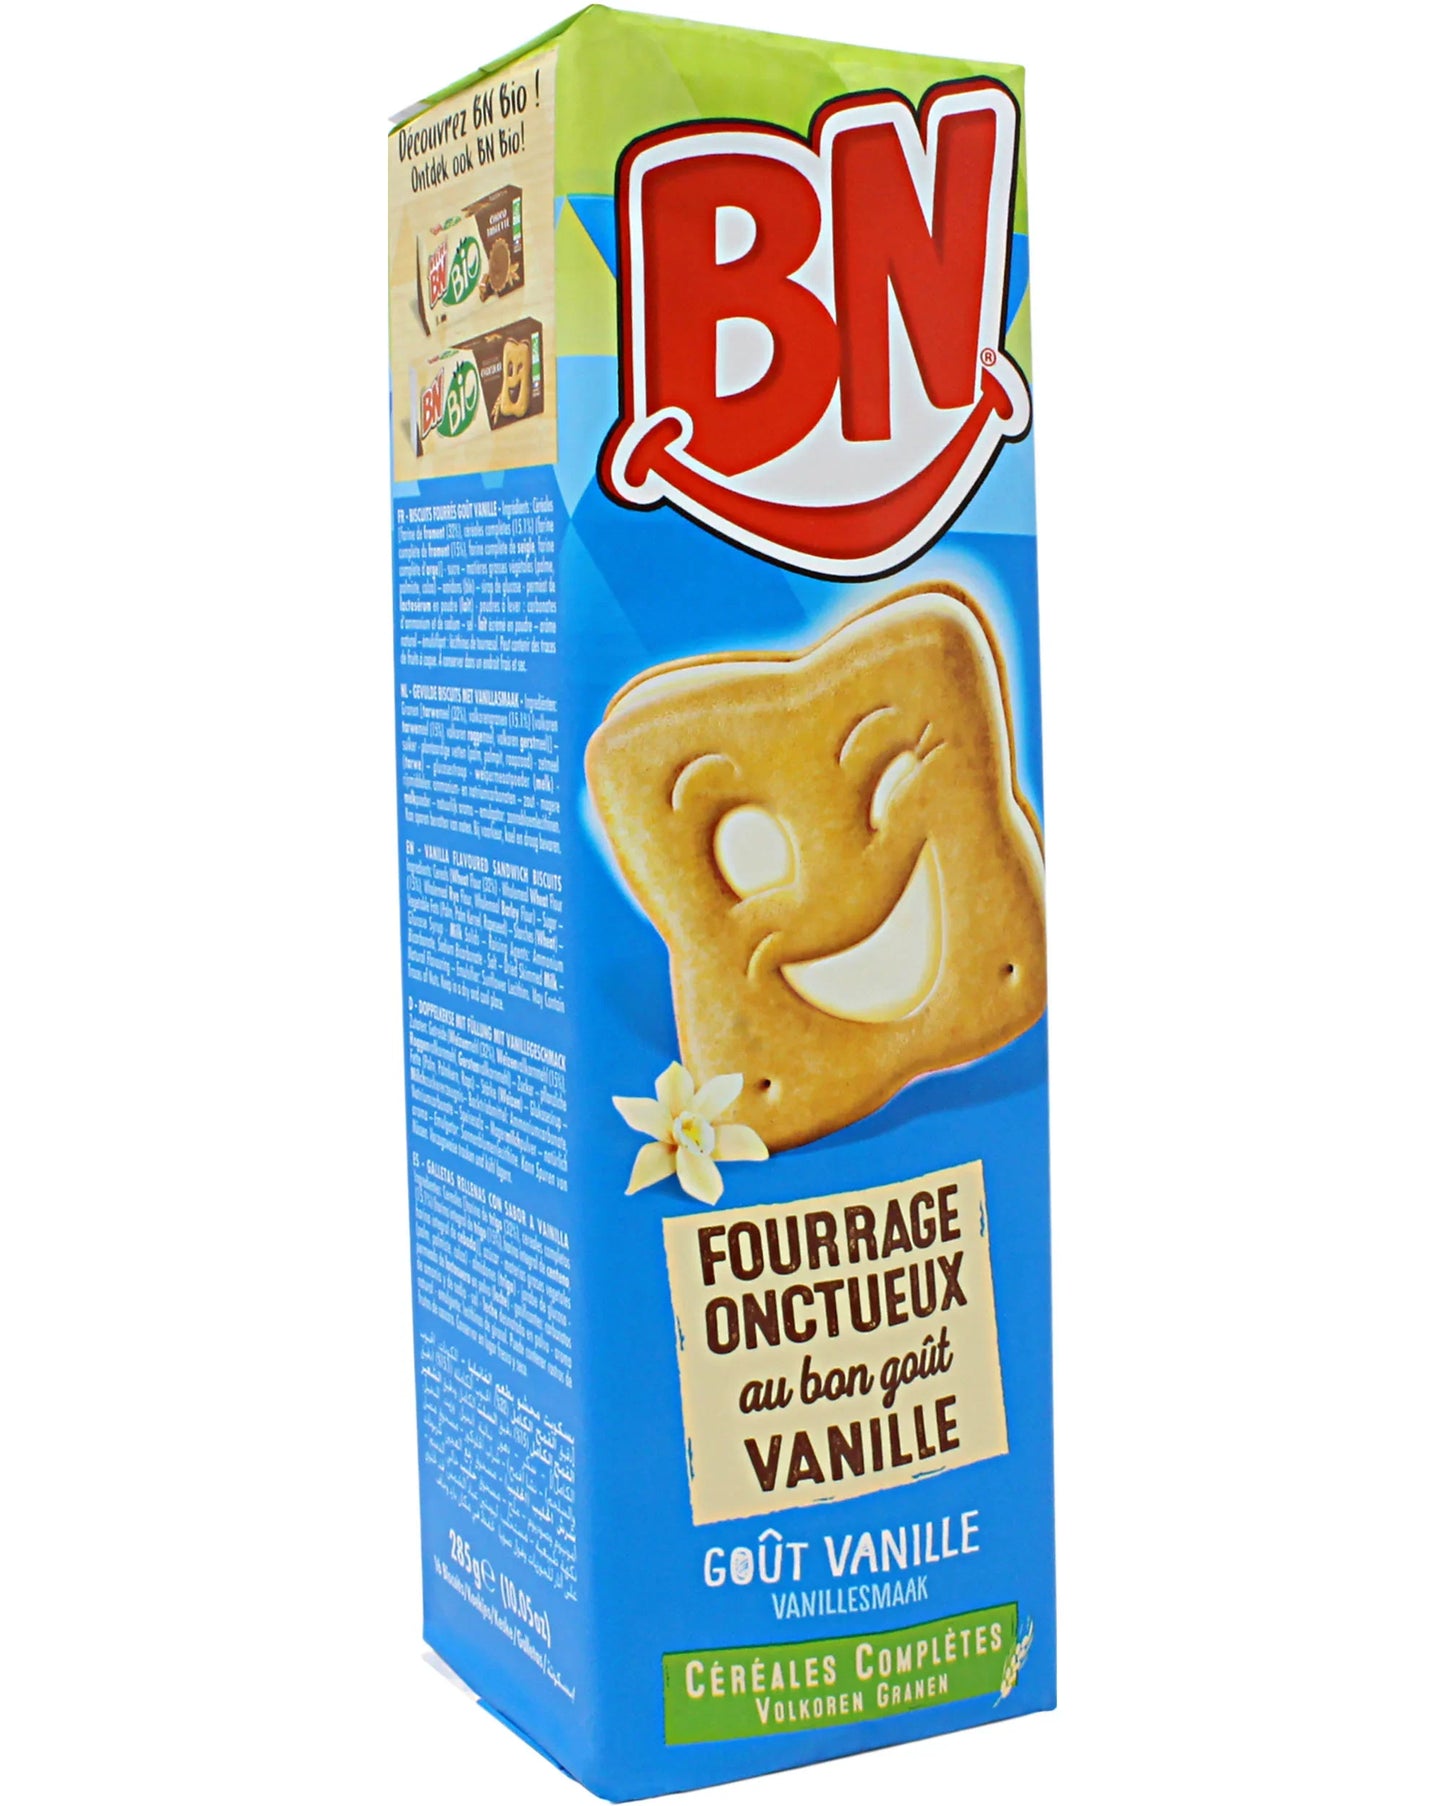 BN Cookie, Vanilla flavored Cookie (France)